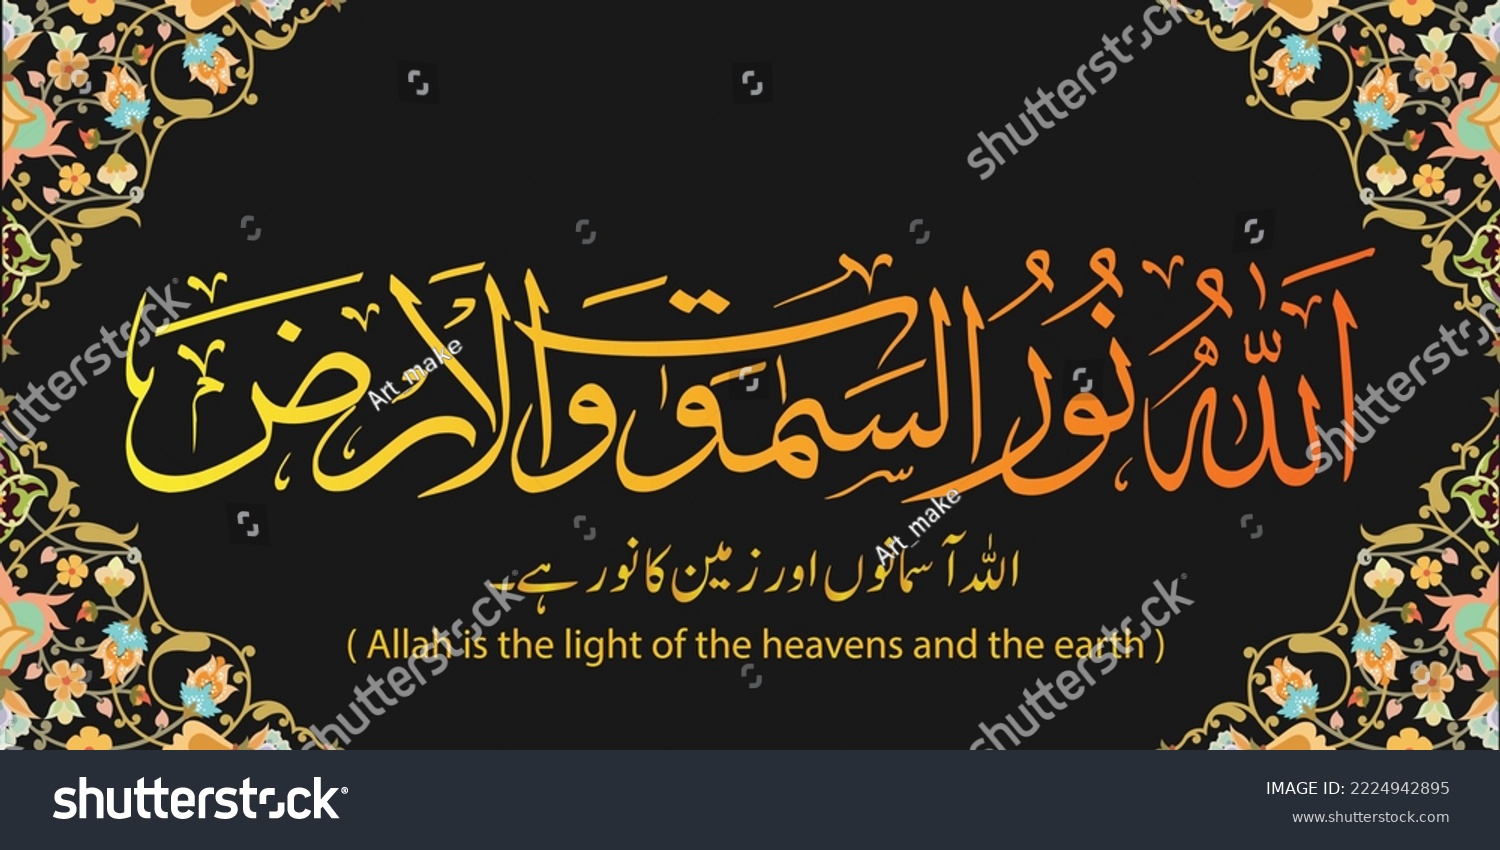 SVG of Arabic calligraphy of Qurani Ayat 